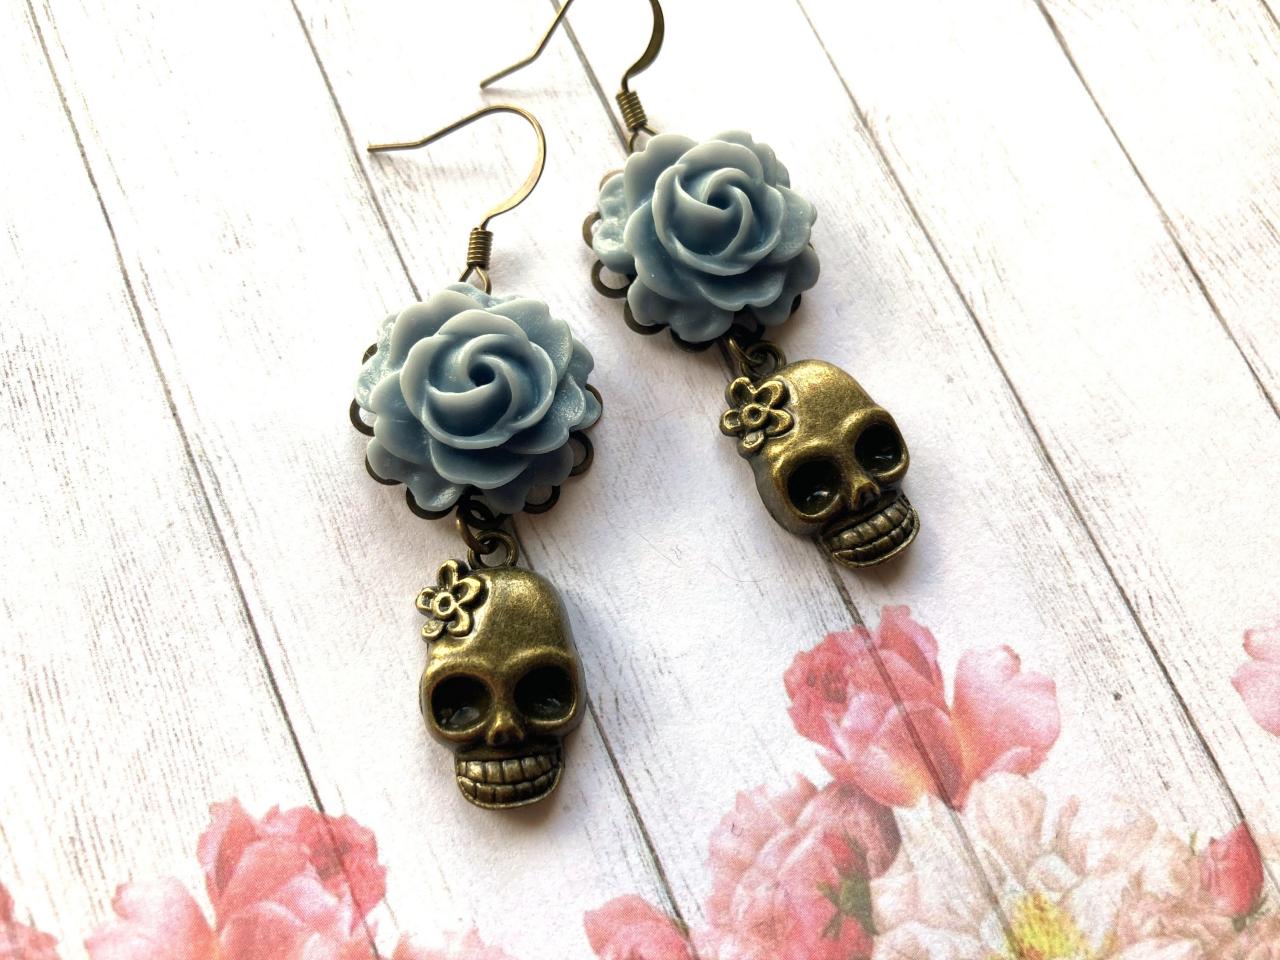 Skull Earrings With Blue Rose Pendants, Day Of The Dead Jewelry, Selma Dreams